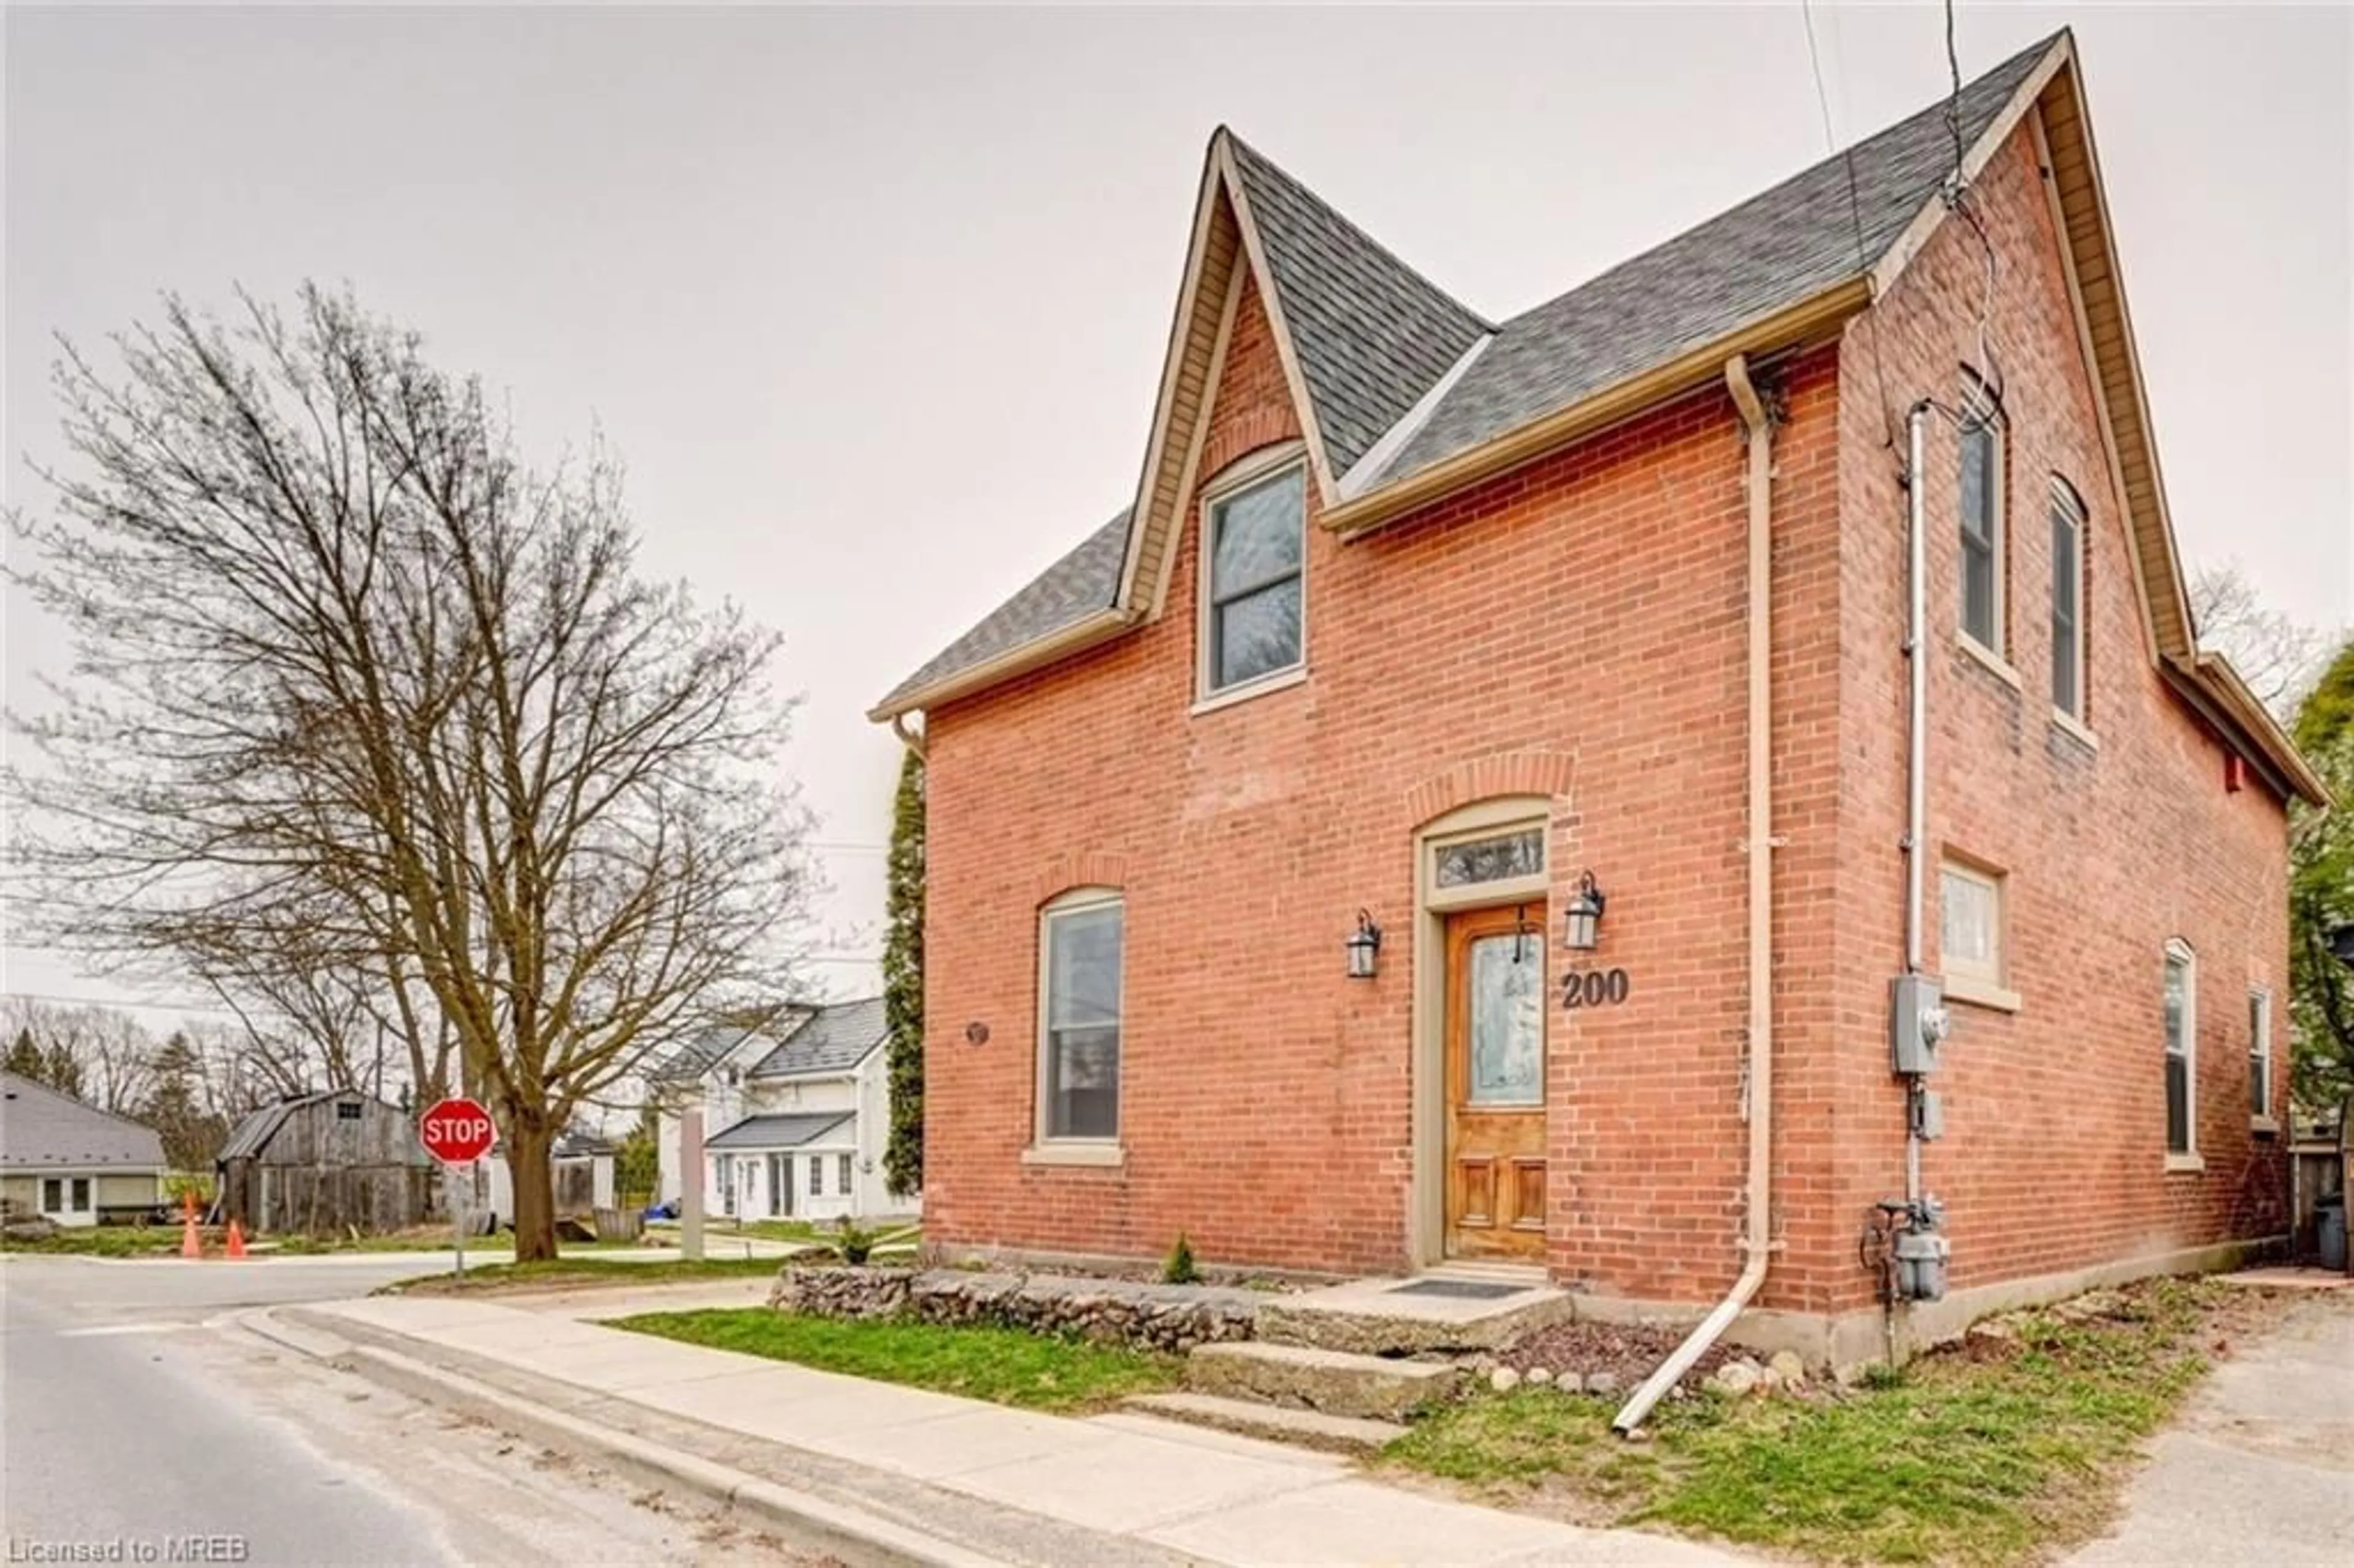 Home with brick exterior material for 200 Gordon St, Shelburne Ontario L9V 2X7